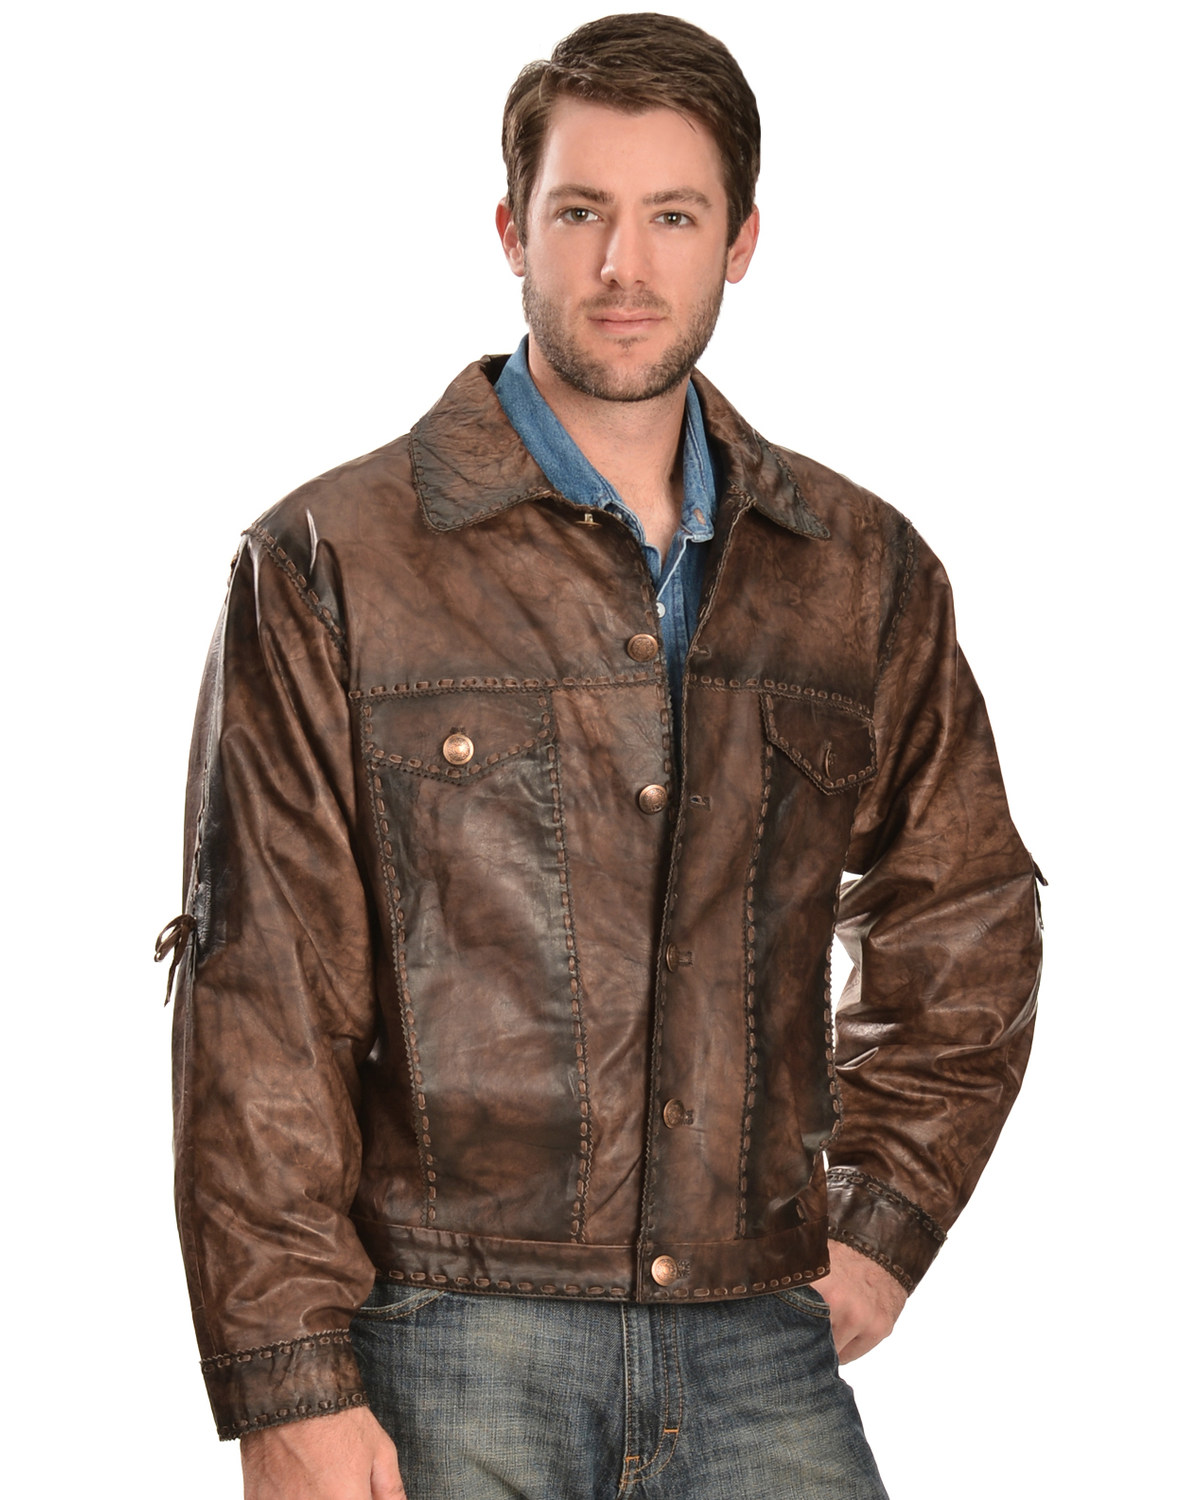 Kobler Leather Men's Rusty Jacket